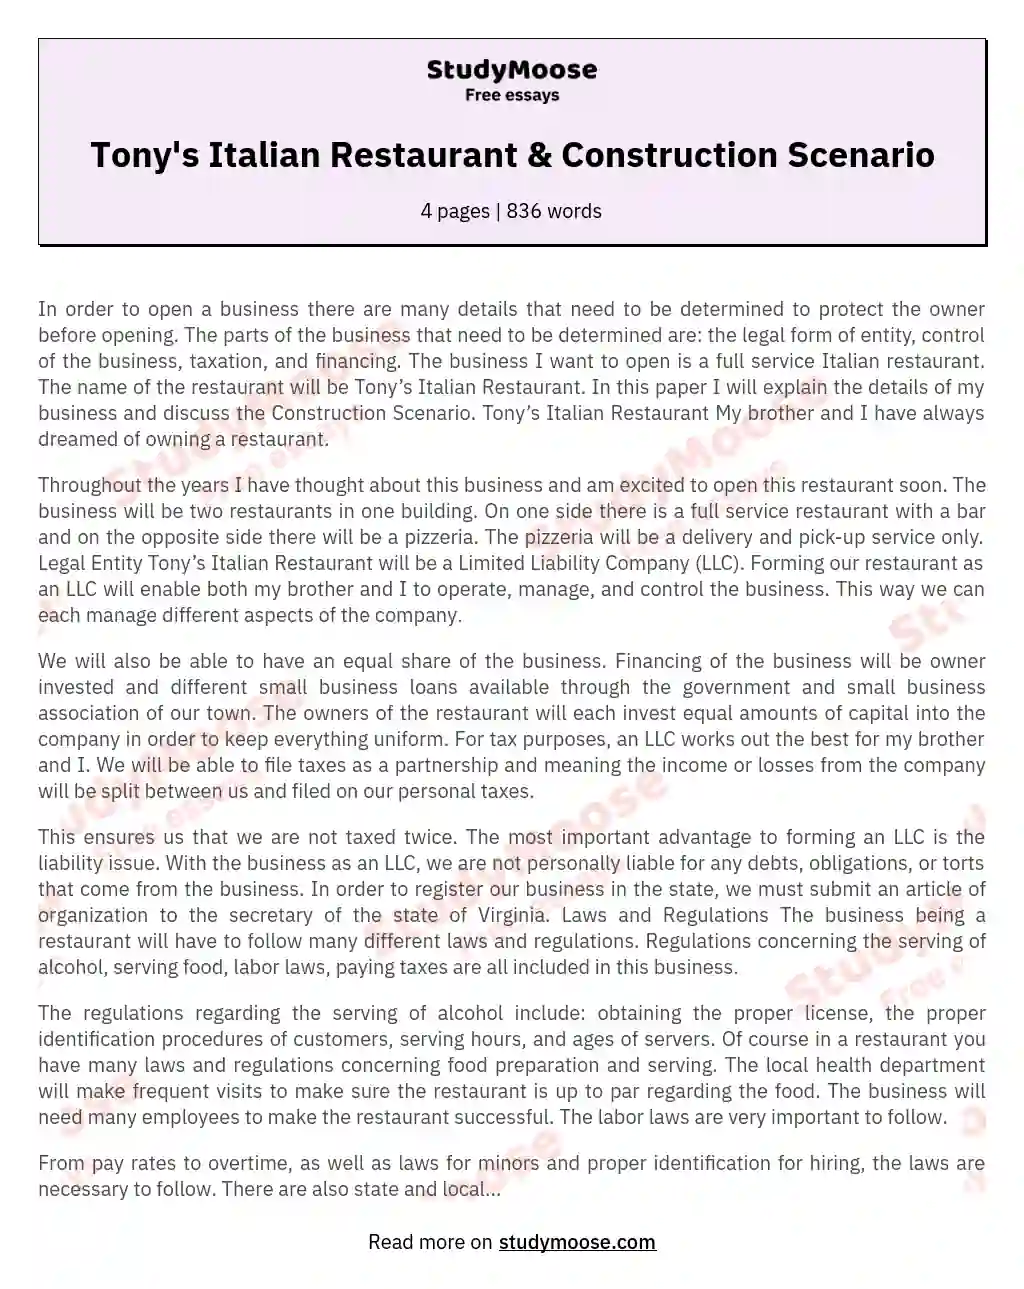 Tony's Italian Restaurant & Construction Scenario essay